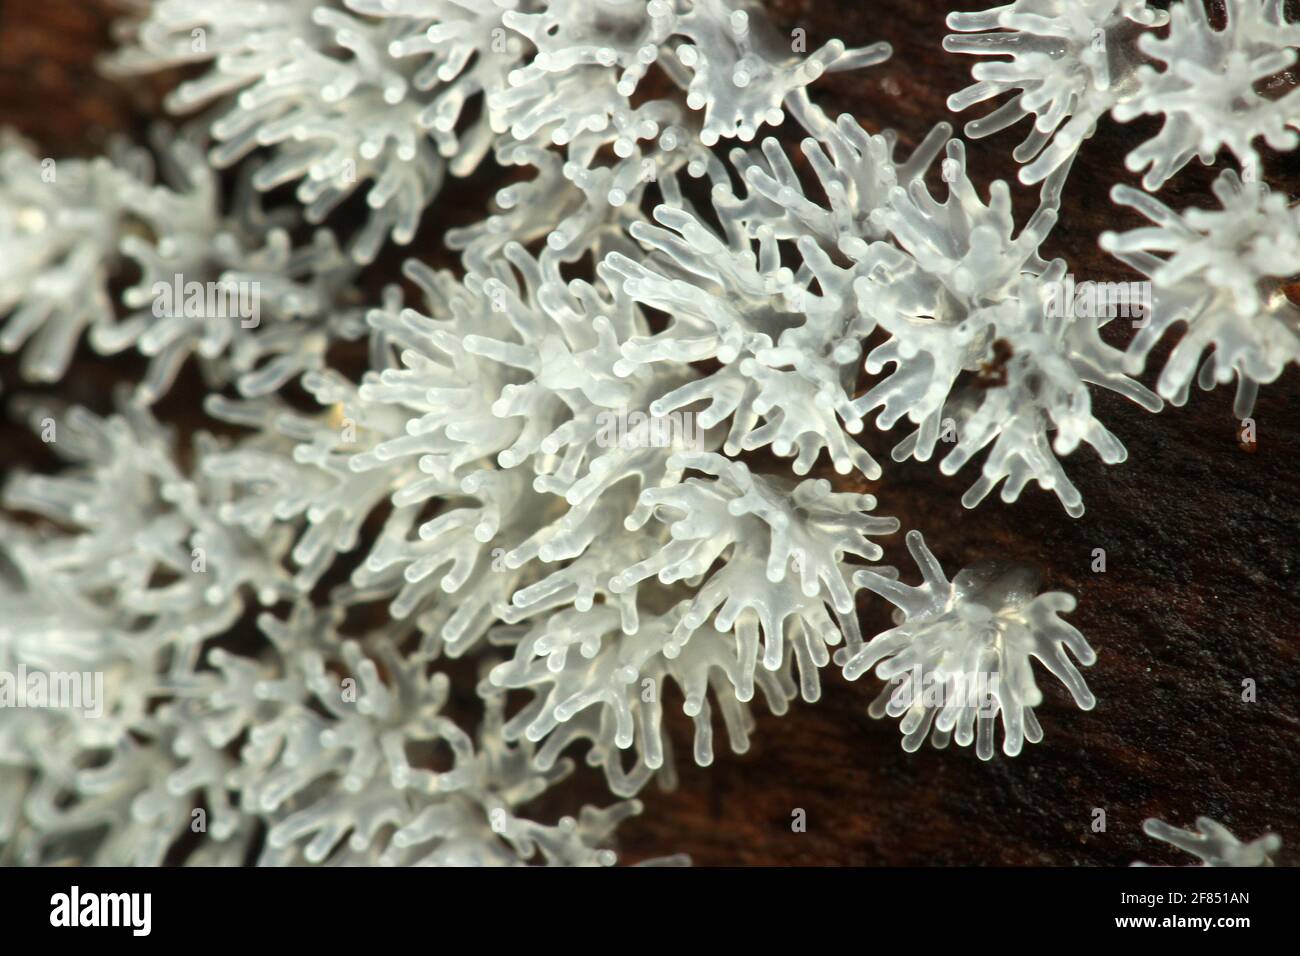 Coral slime fungus (Ceratiomyxa) Stock Photo